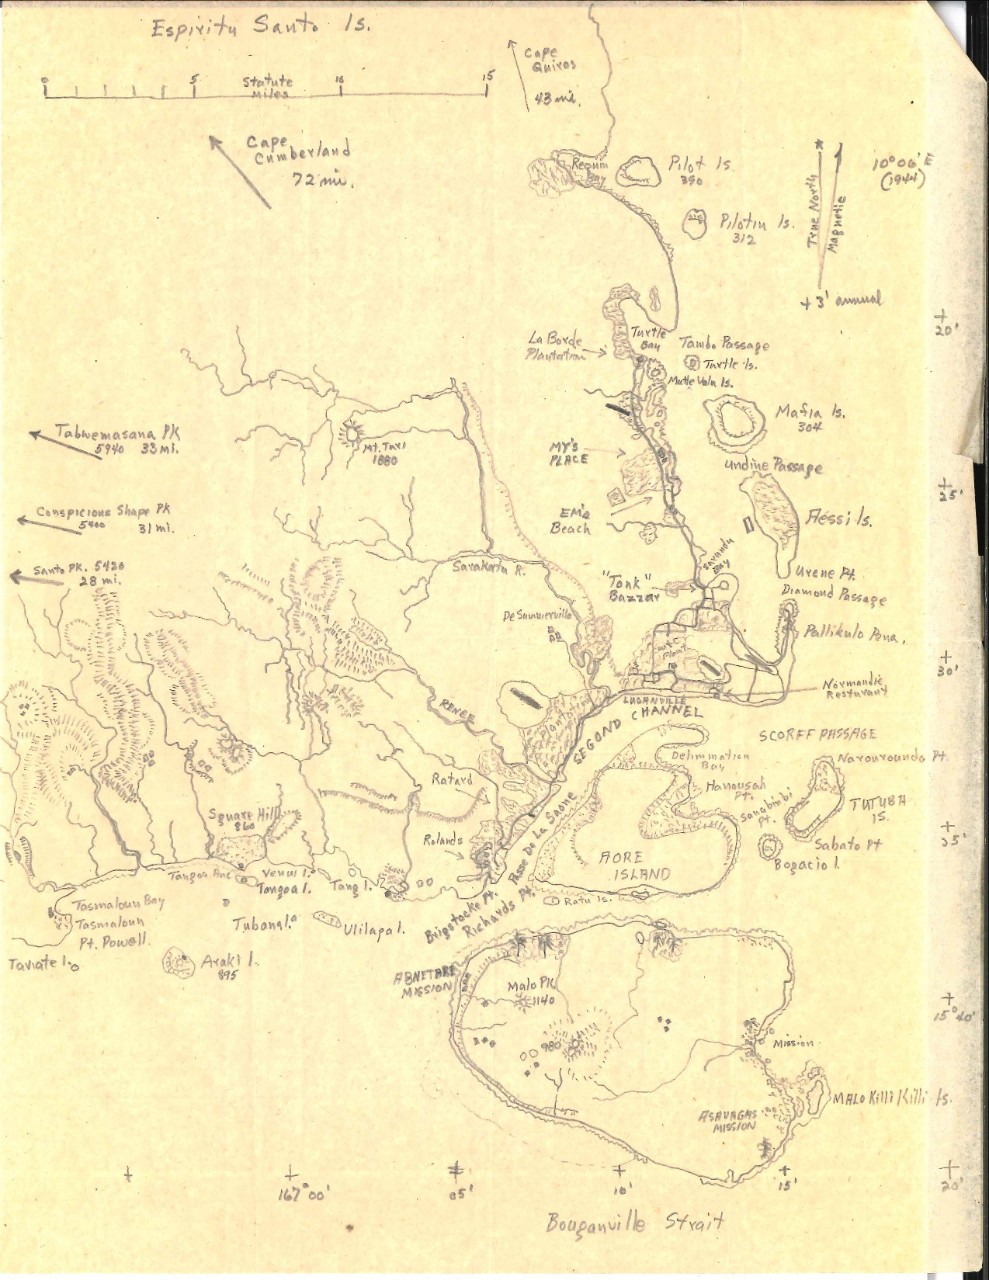 Hand-drawn map of Espiritu Santo Island, Oct. 15, 1945